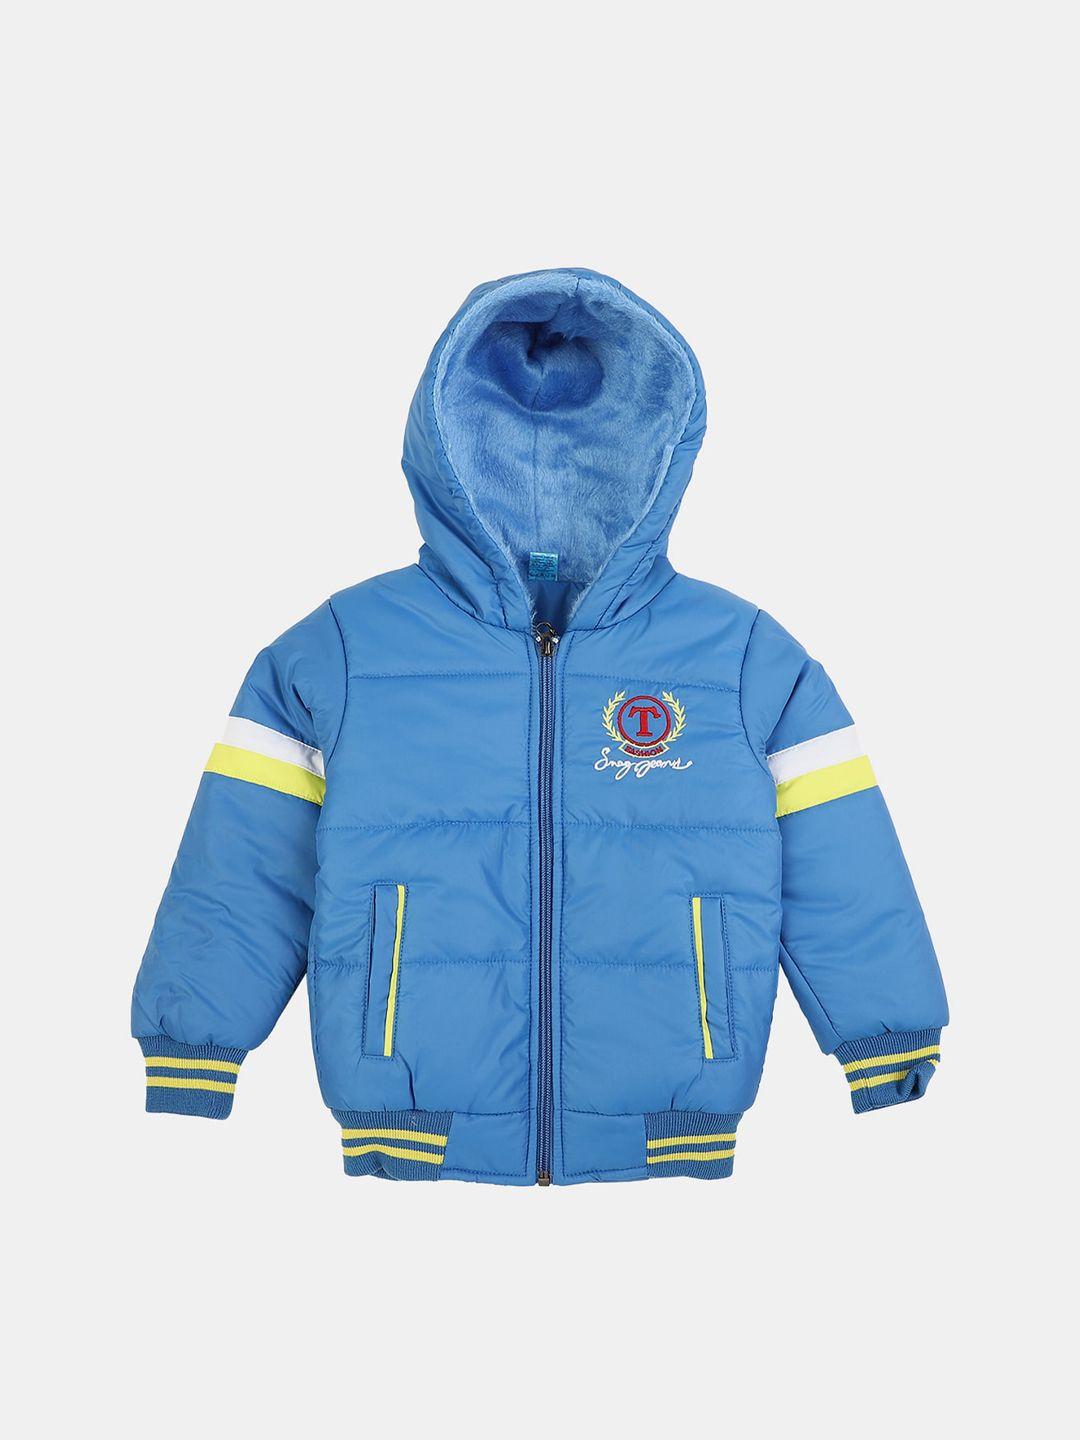 v-mart unisex kids blue training or gym puffer jacket with patchwork